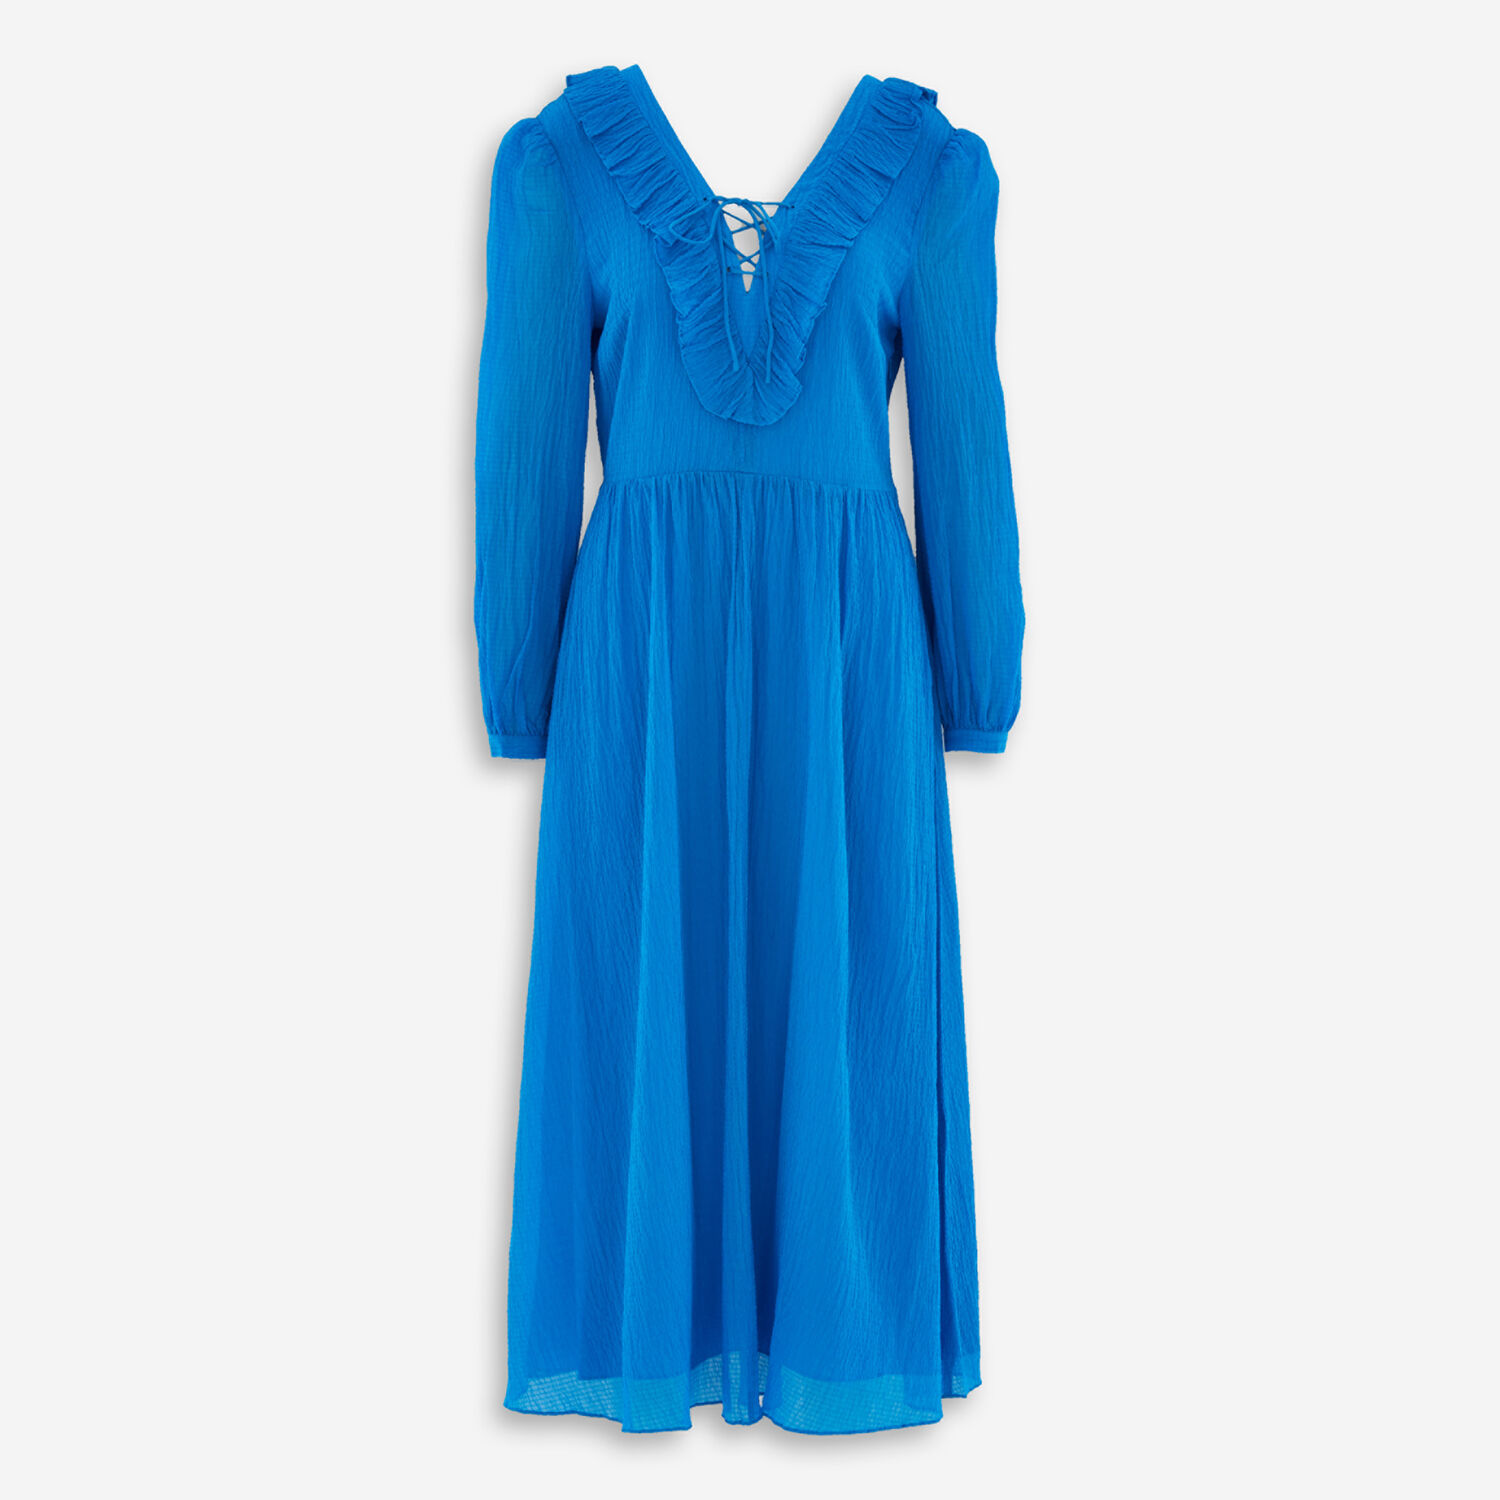 Blue Ruffle Dress - TK Maxx UK